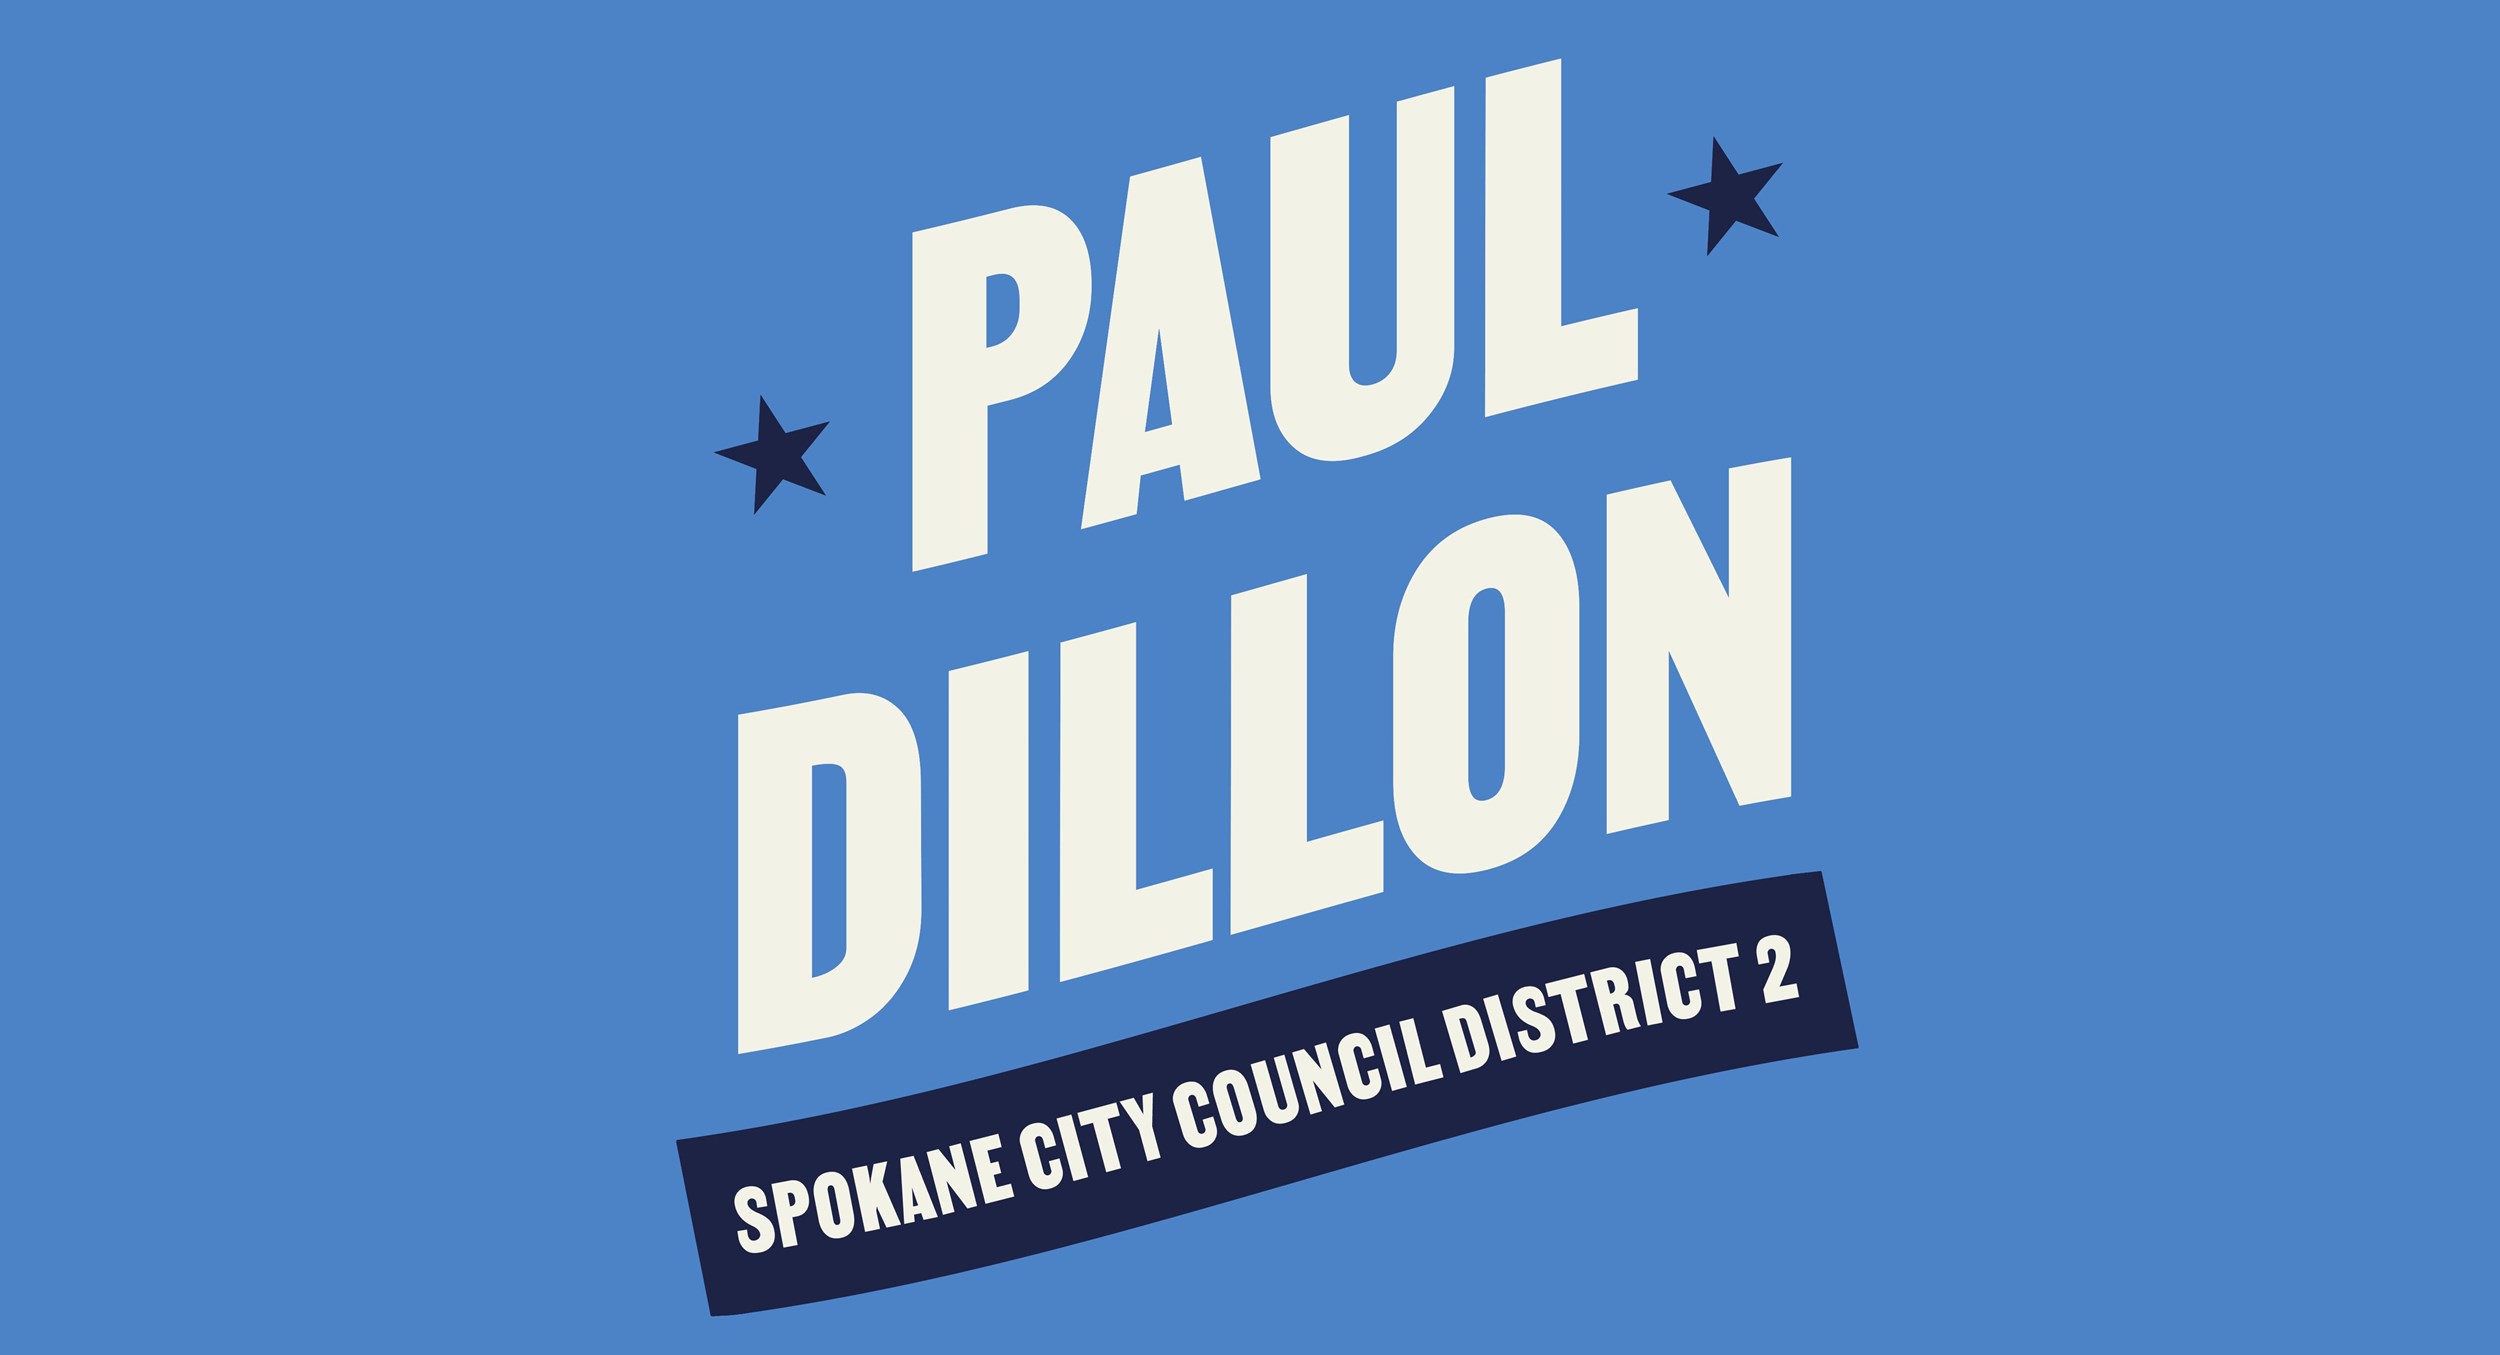 Paul Dillon Spokane City Council District 2